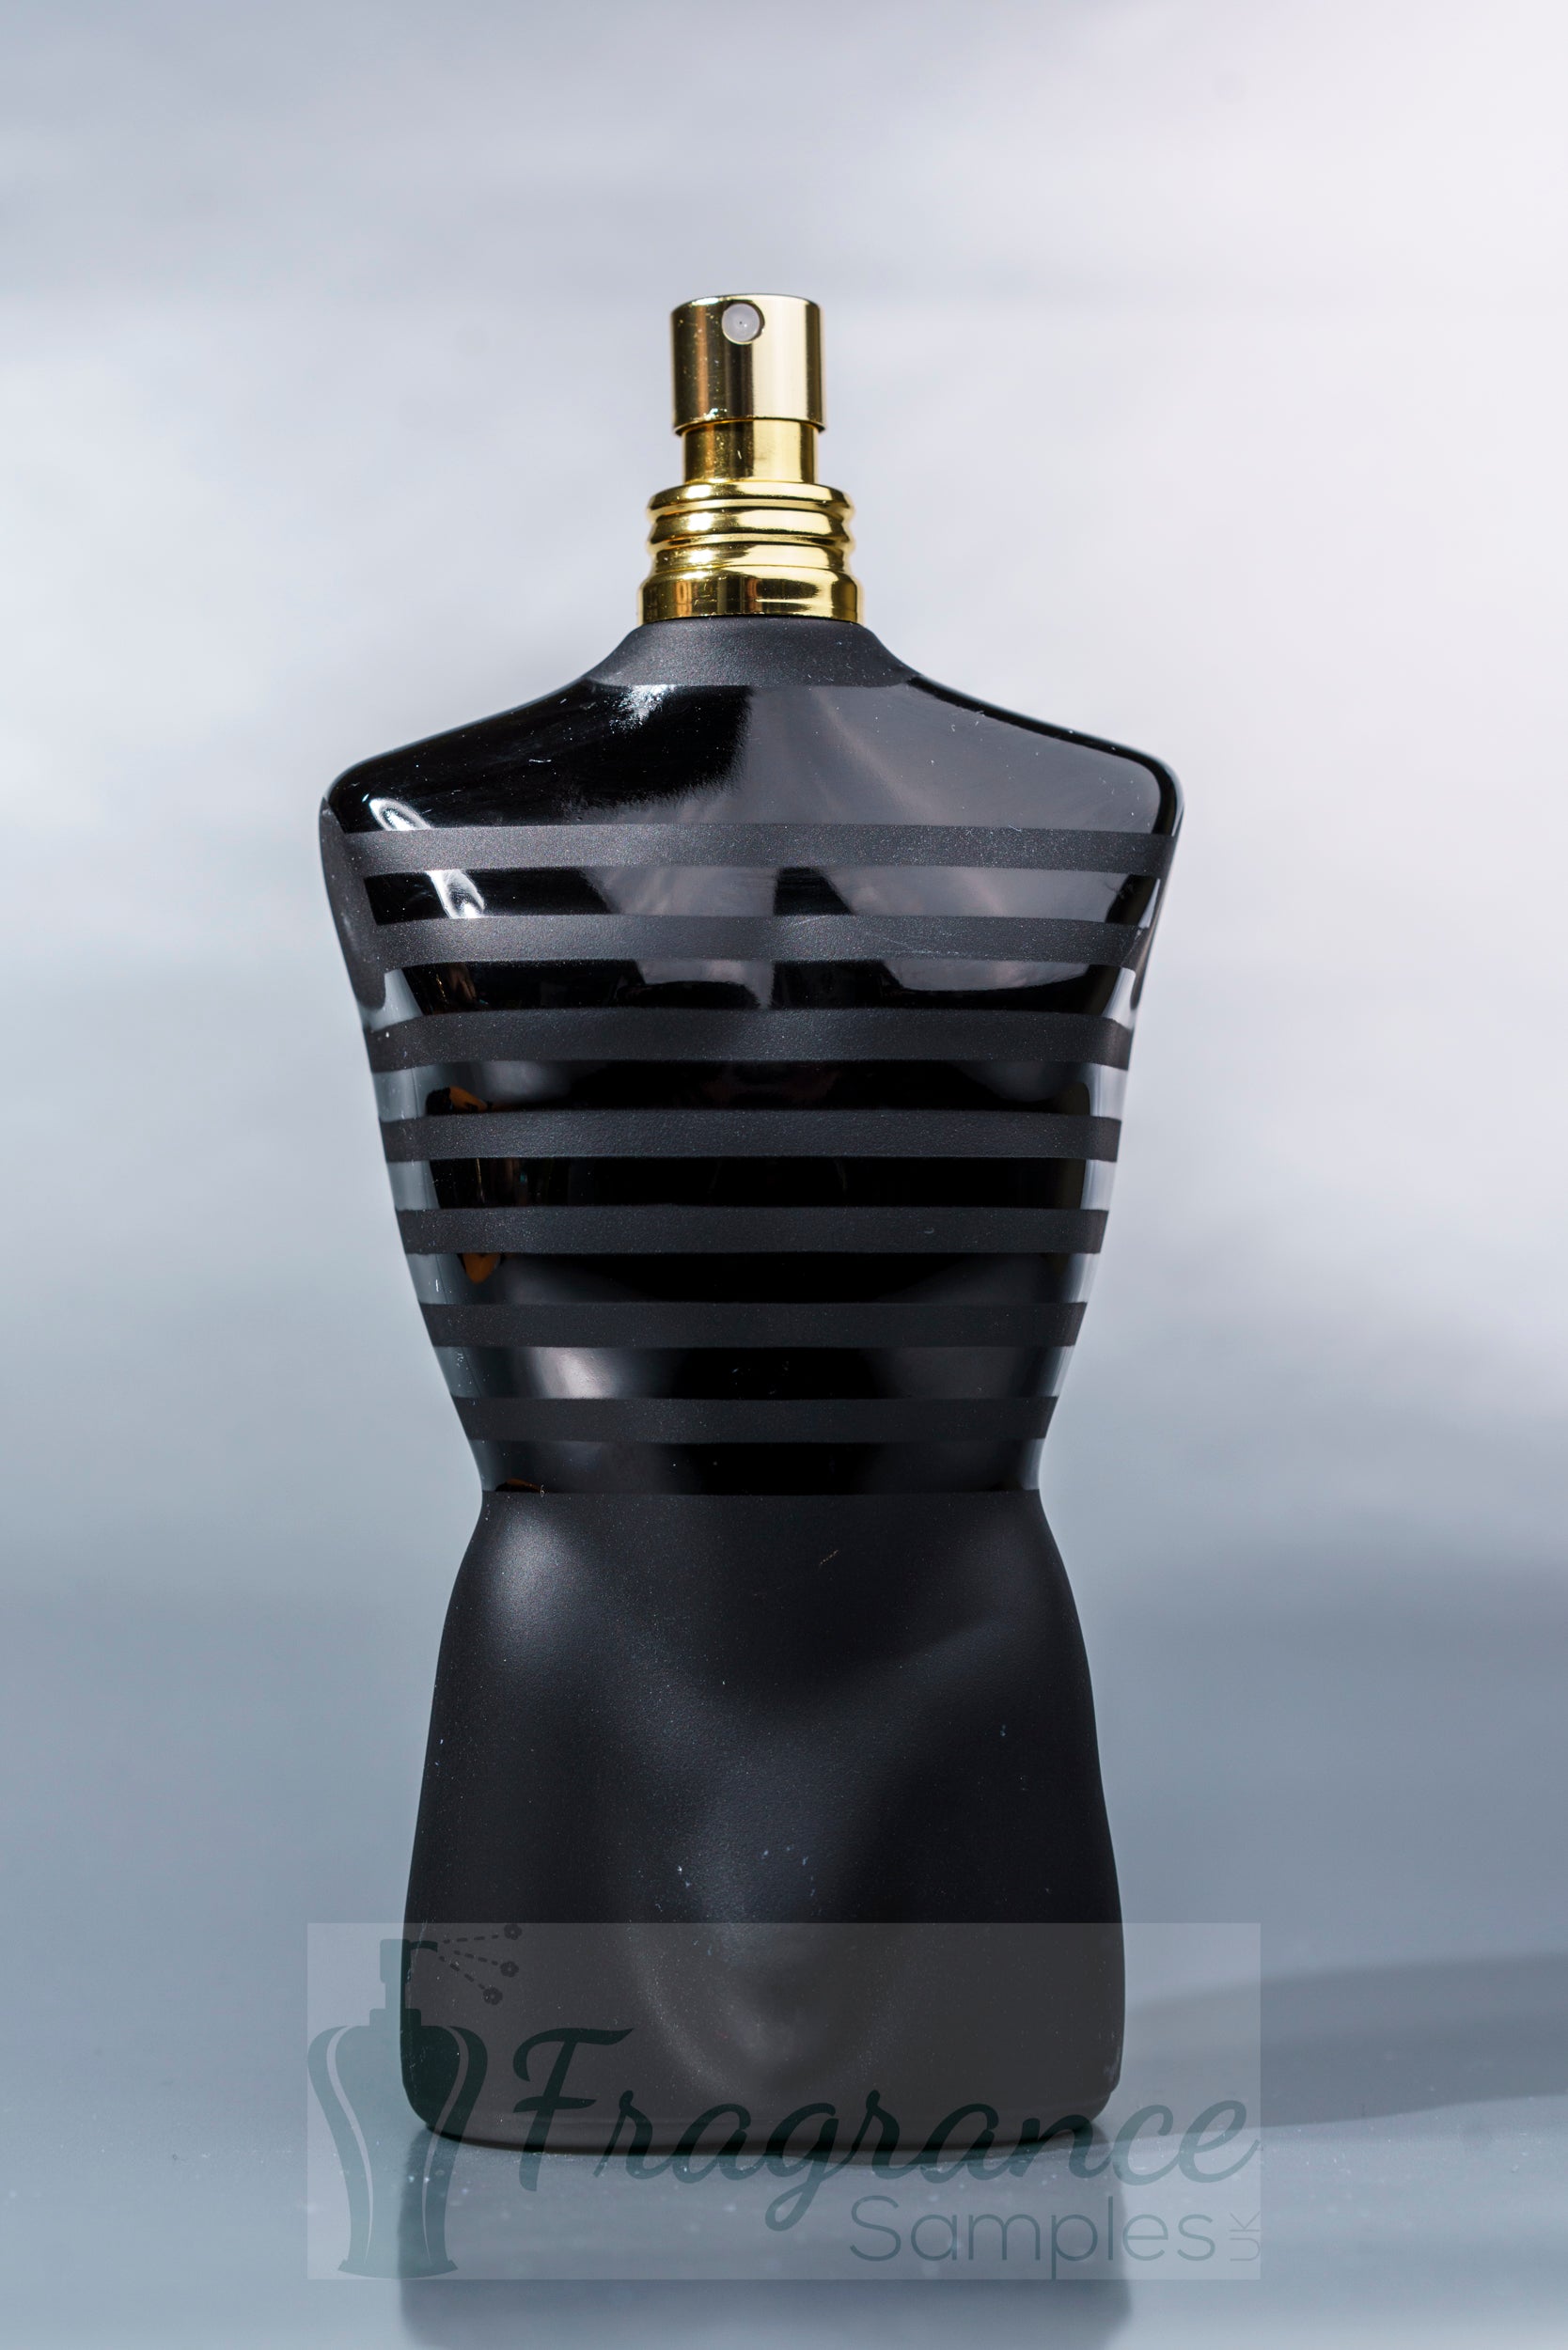 Jean-Paul Gaultier - Fashion, Perfume & Facts